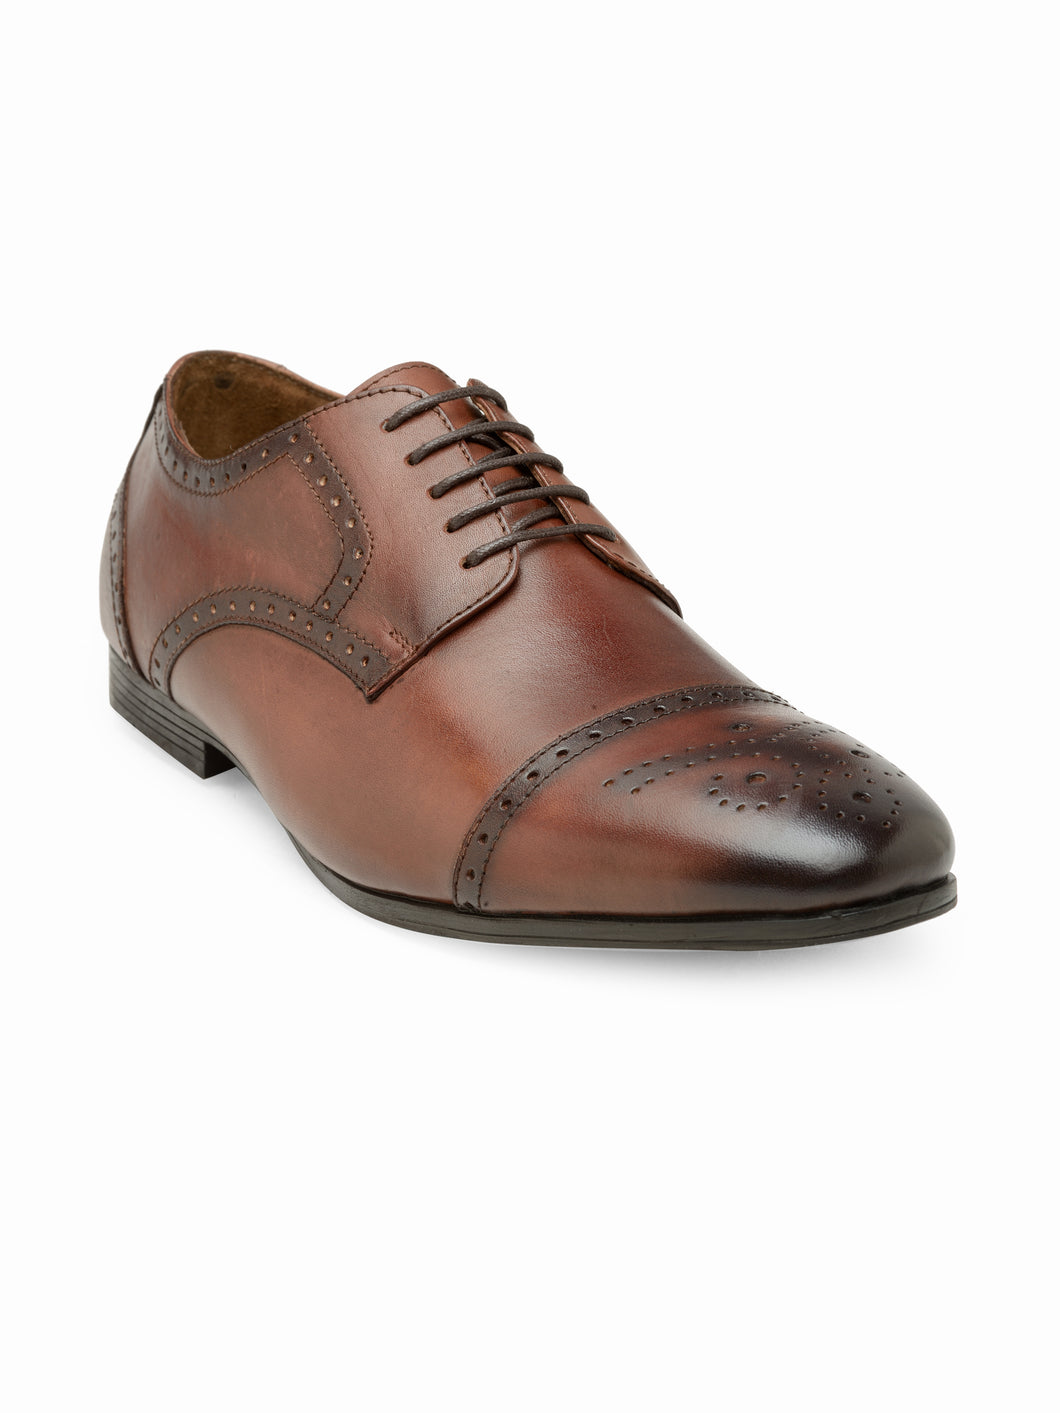 Teakwood Men Genuine Leather Two toned Wing Cap Brogues Formal/Casual Shoe